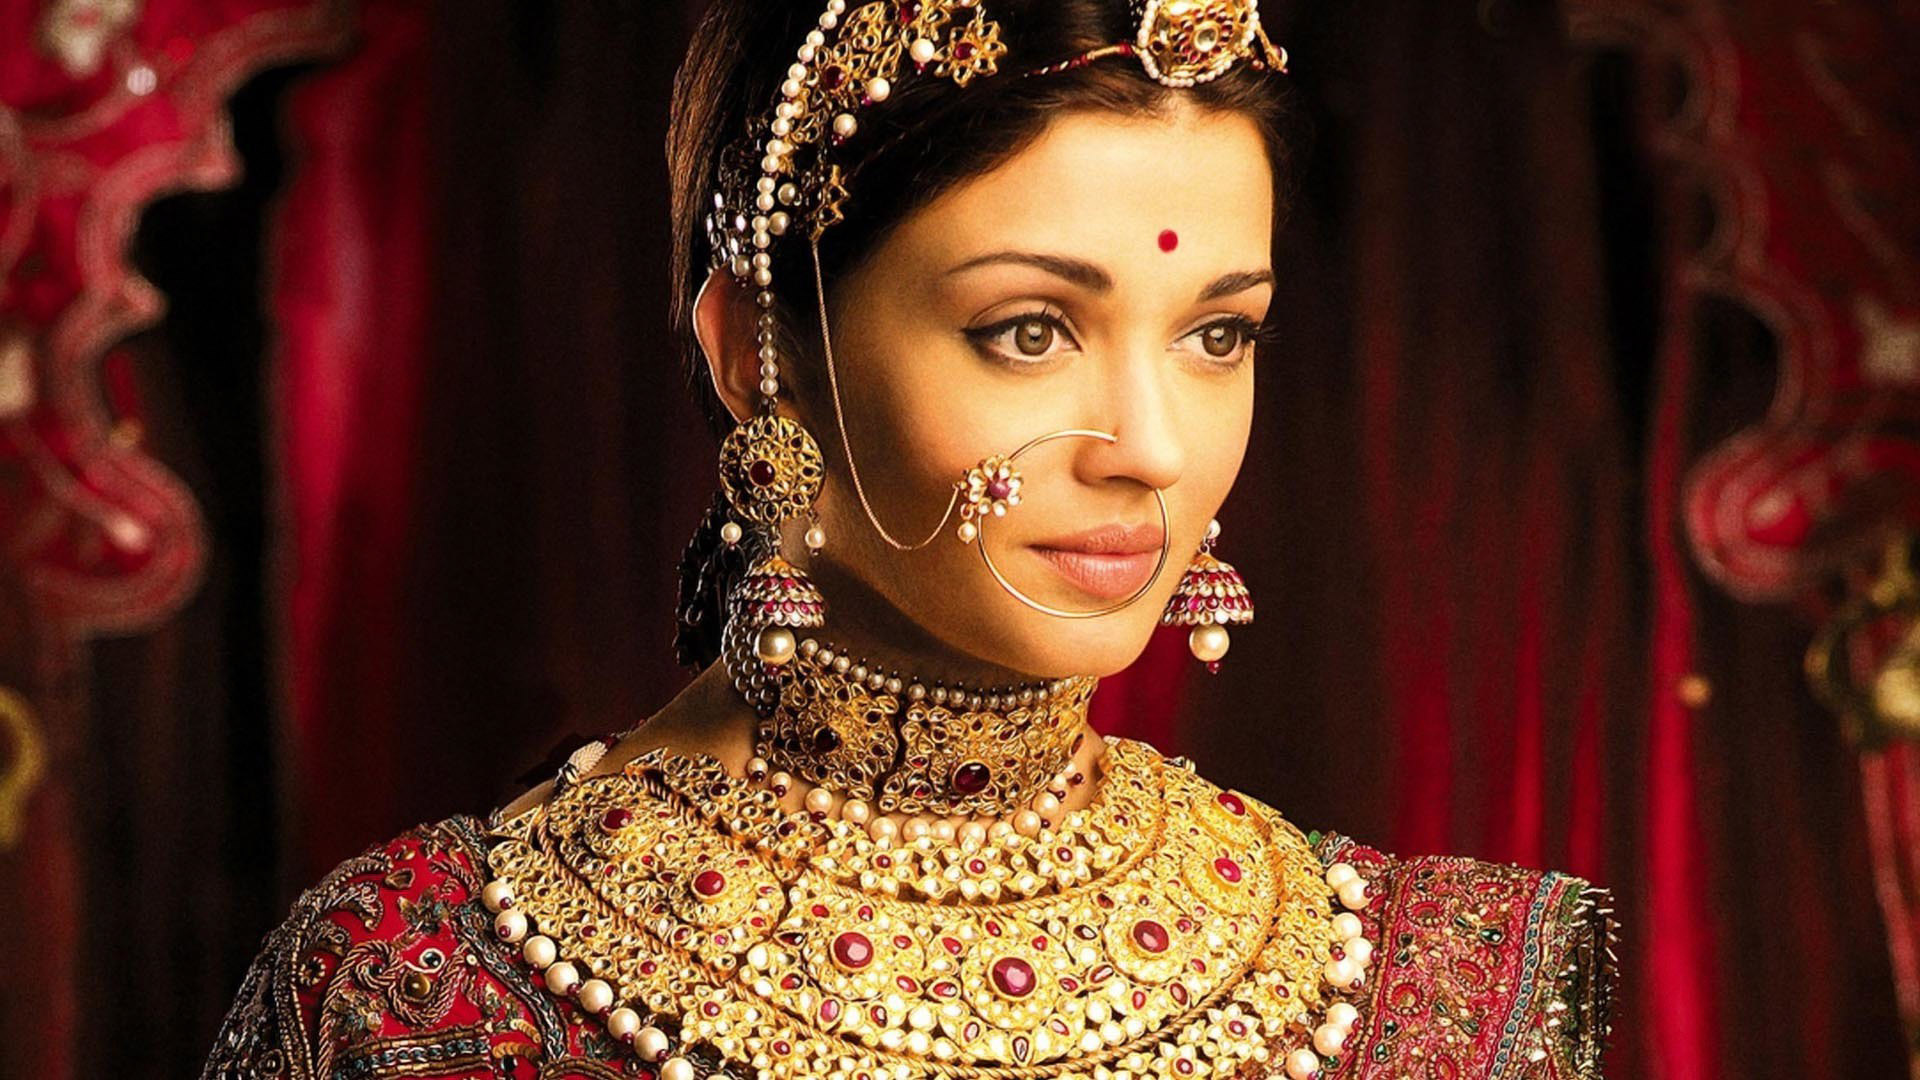 jodha wallpaper,jewellery,bride,tradition,headpiece,fashion accessory